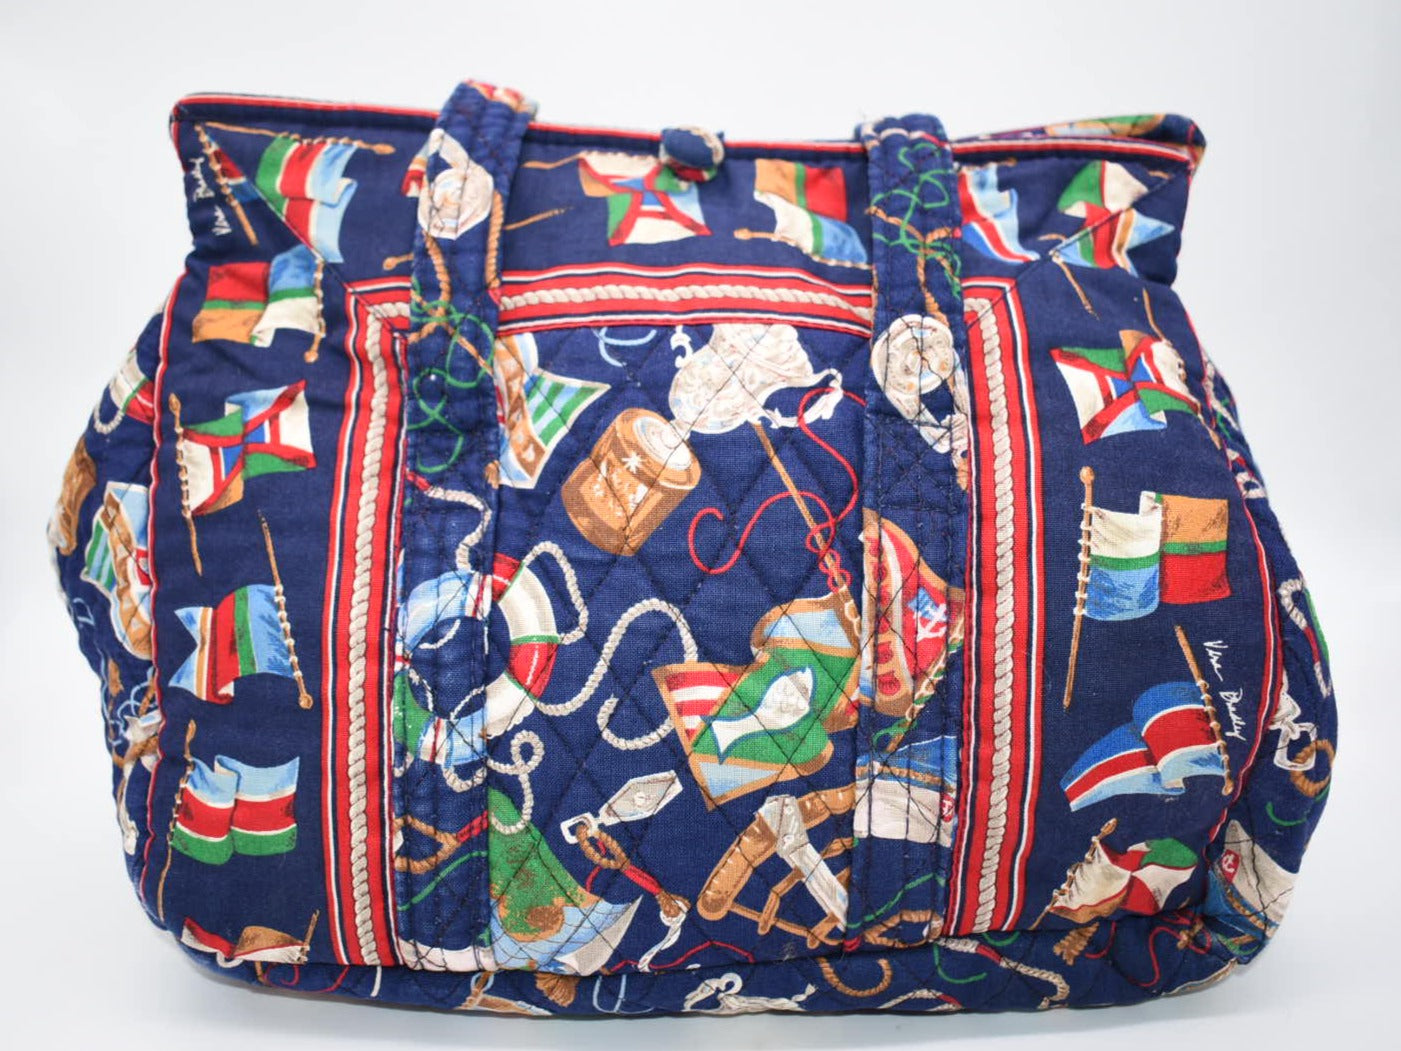 Vintage Vera Bradley Hoosier Shoulder Bag in "Regatta- 1994" Pattern